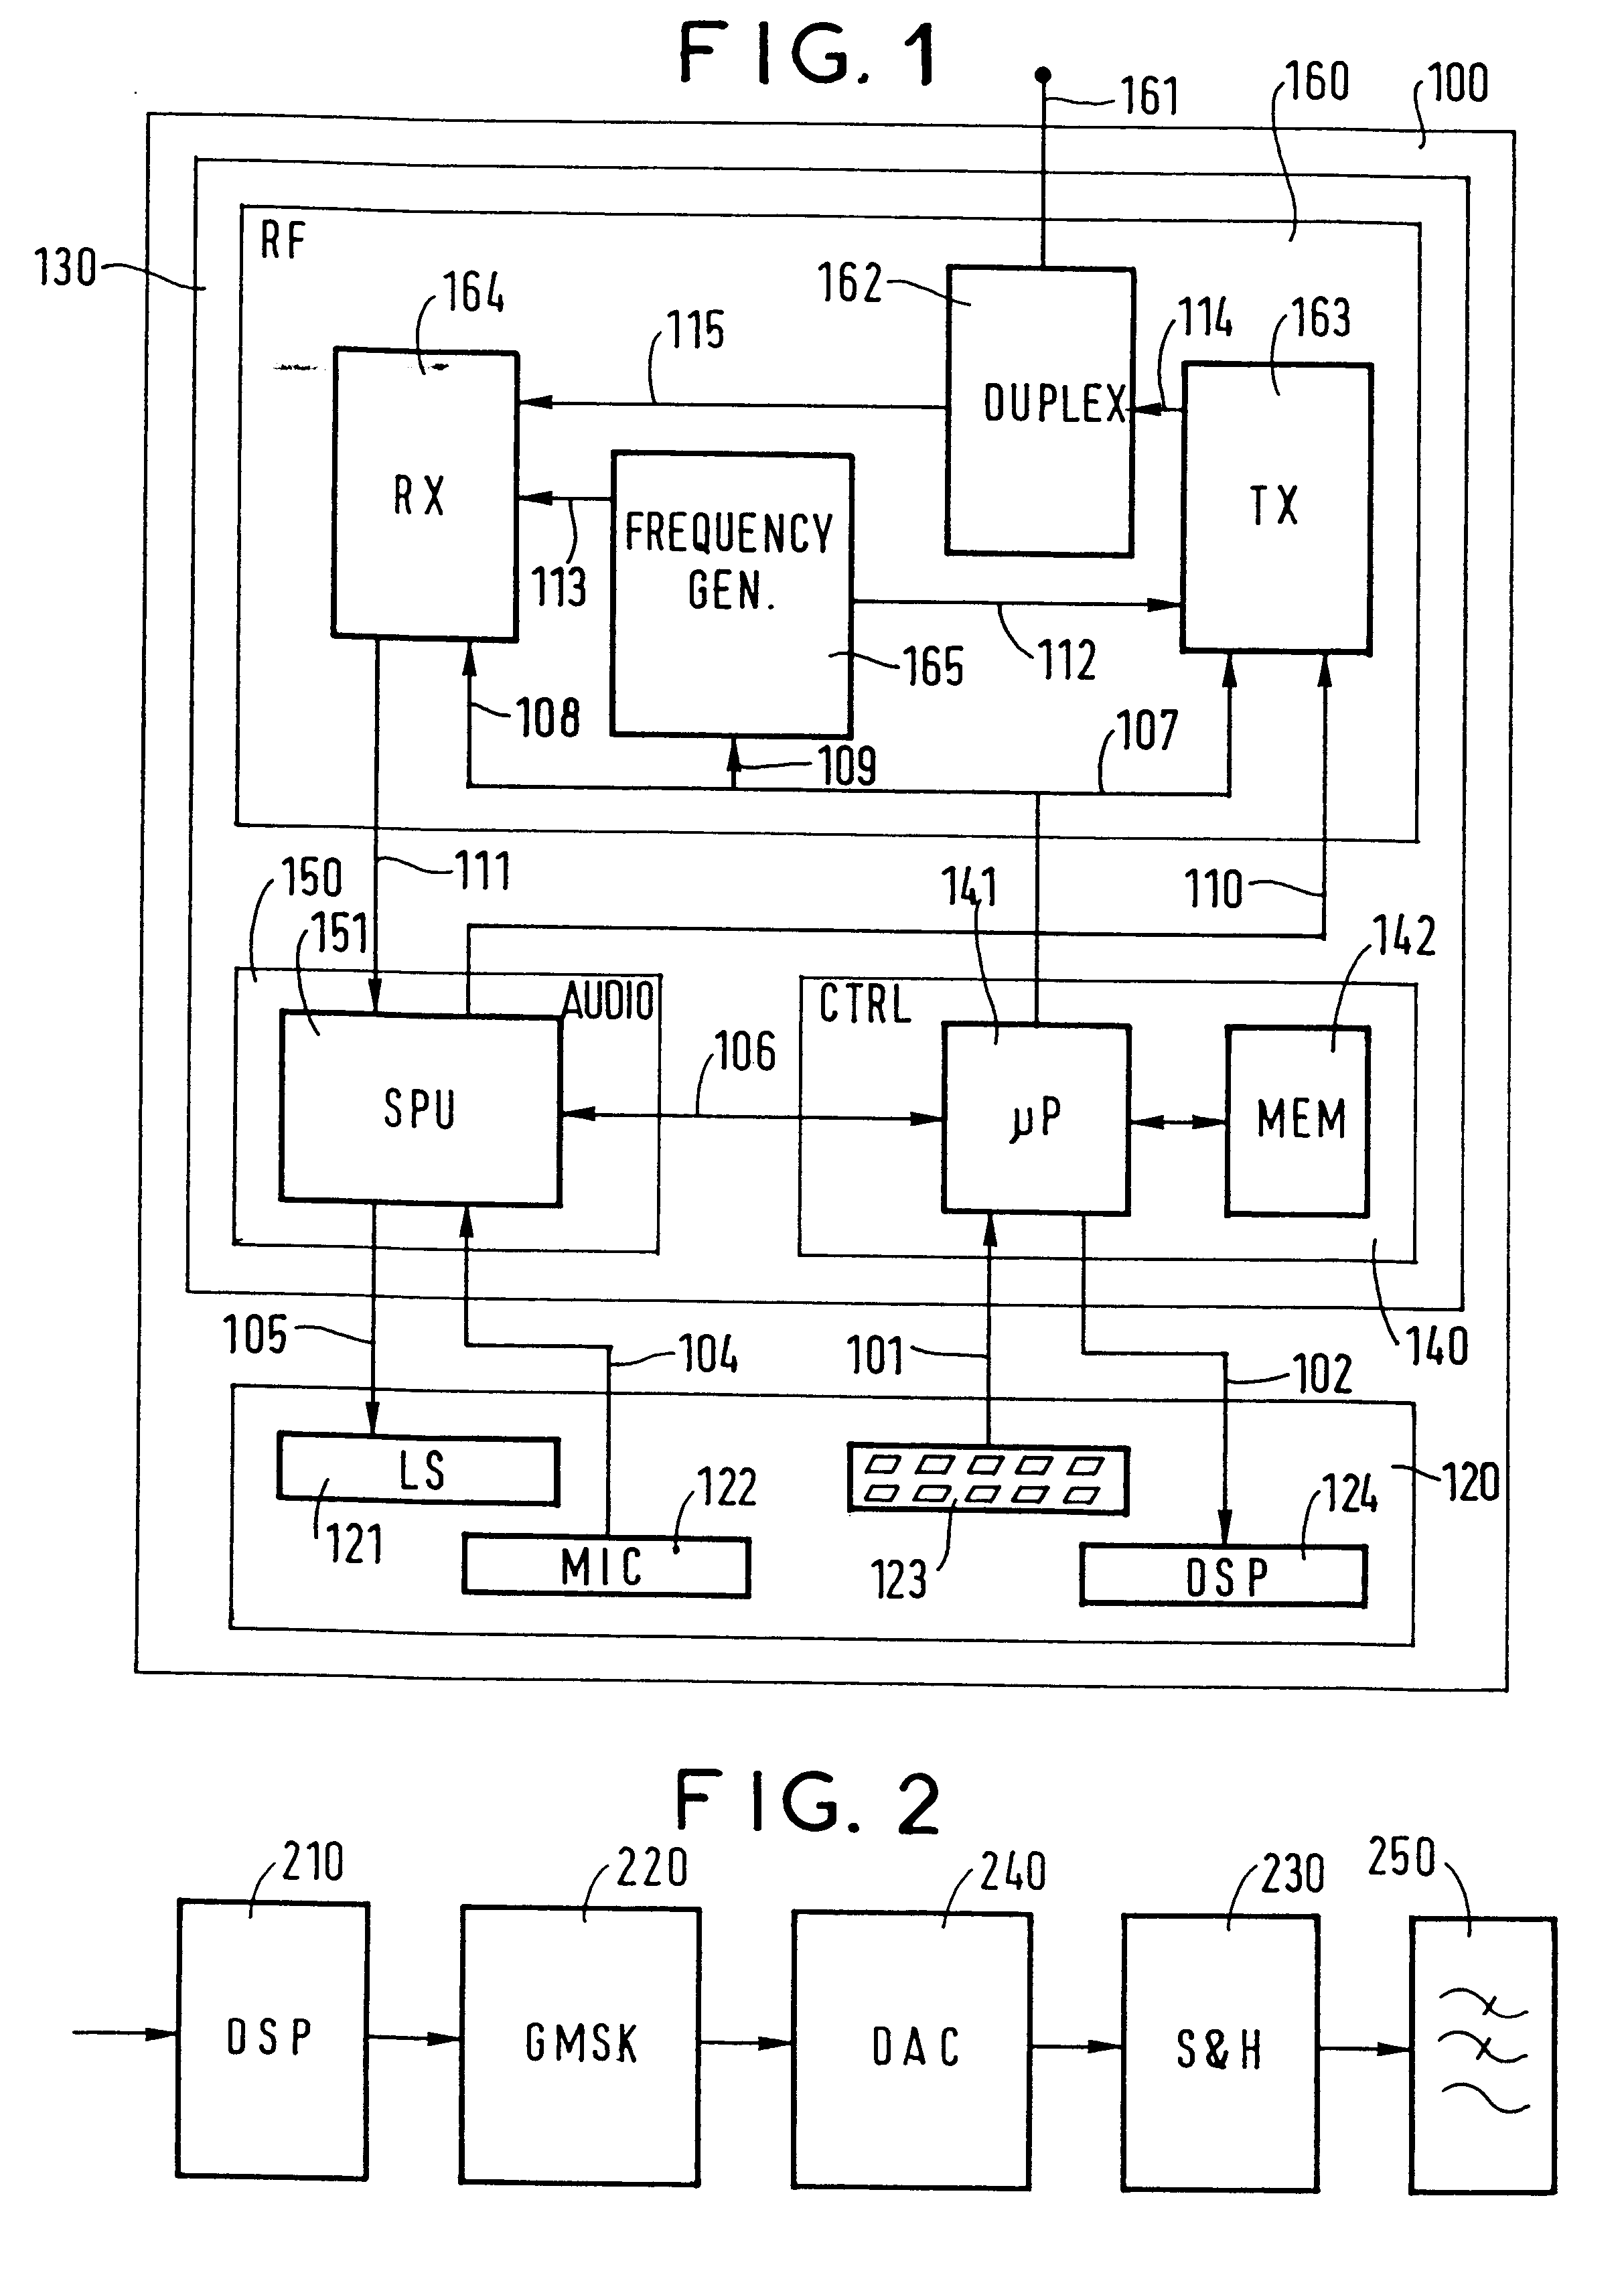 Electronic digital-to-analog converter circuit for a baseband transmission system